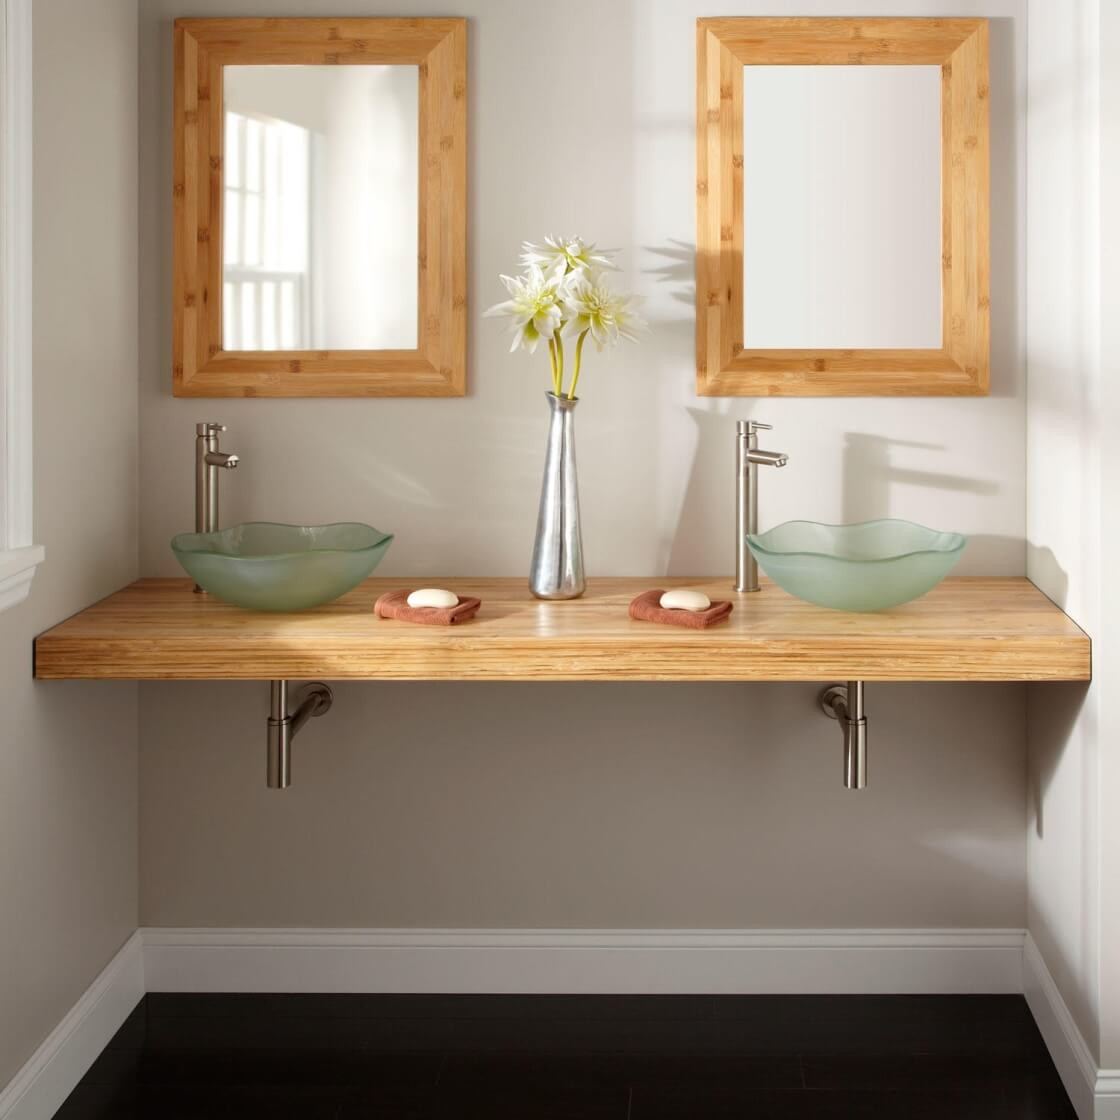 DIY Bathroom Vanity Top
 17 DIY Vanity Mirror Ideas to Make Your Room More Beautiful